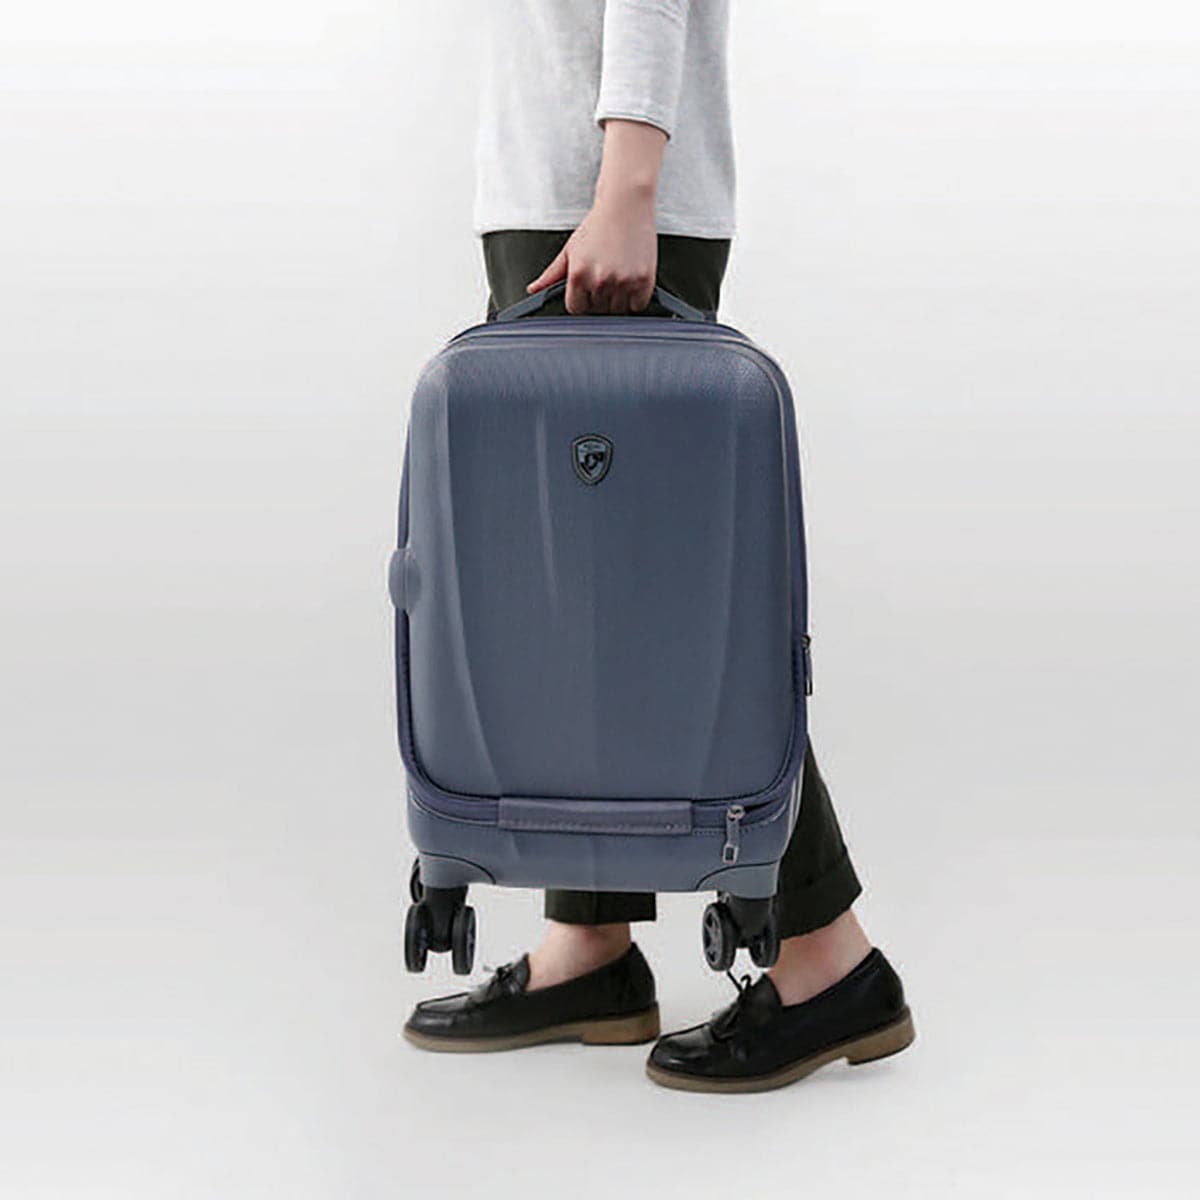 Heys Vantage Smart Access 3 Piece Spinner Luggage Set